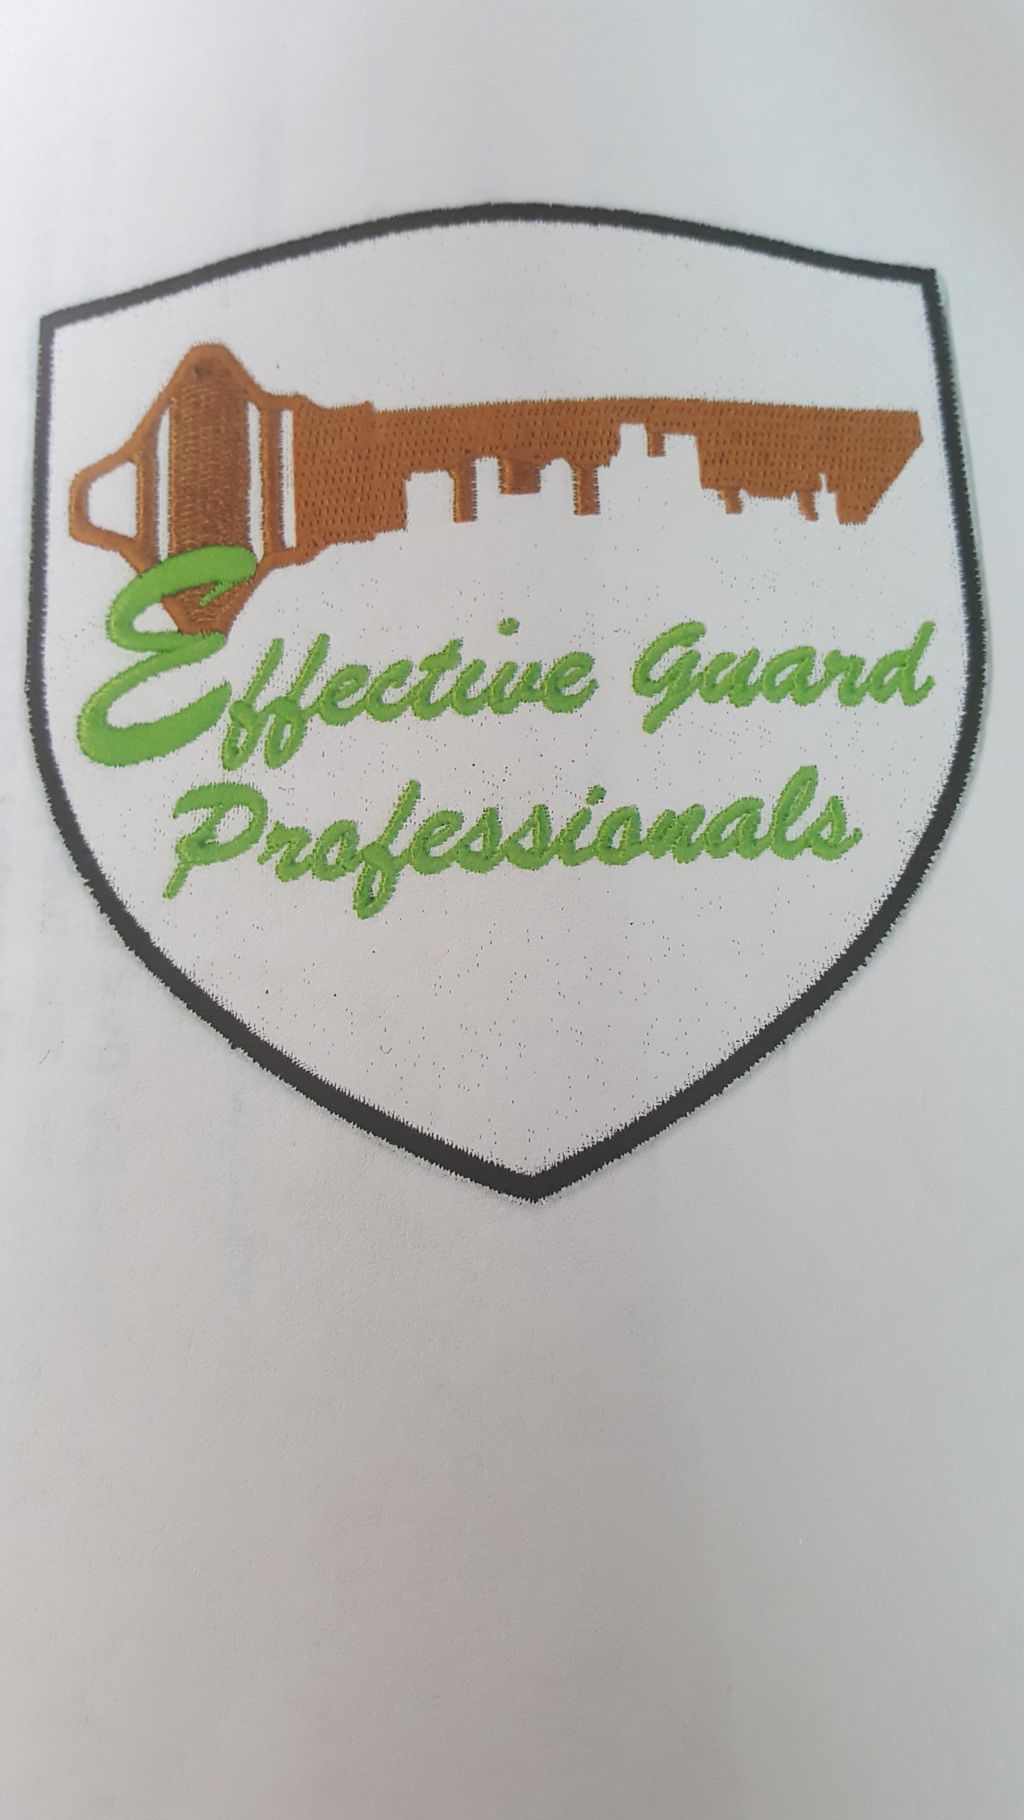 Effective Guard Professionals